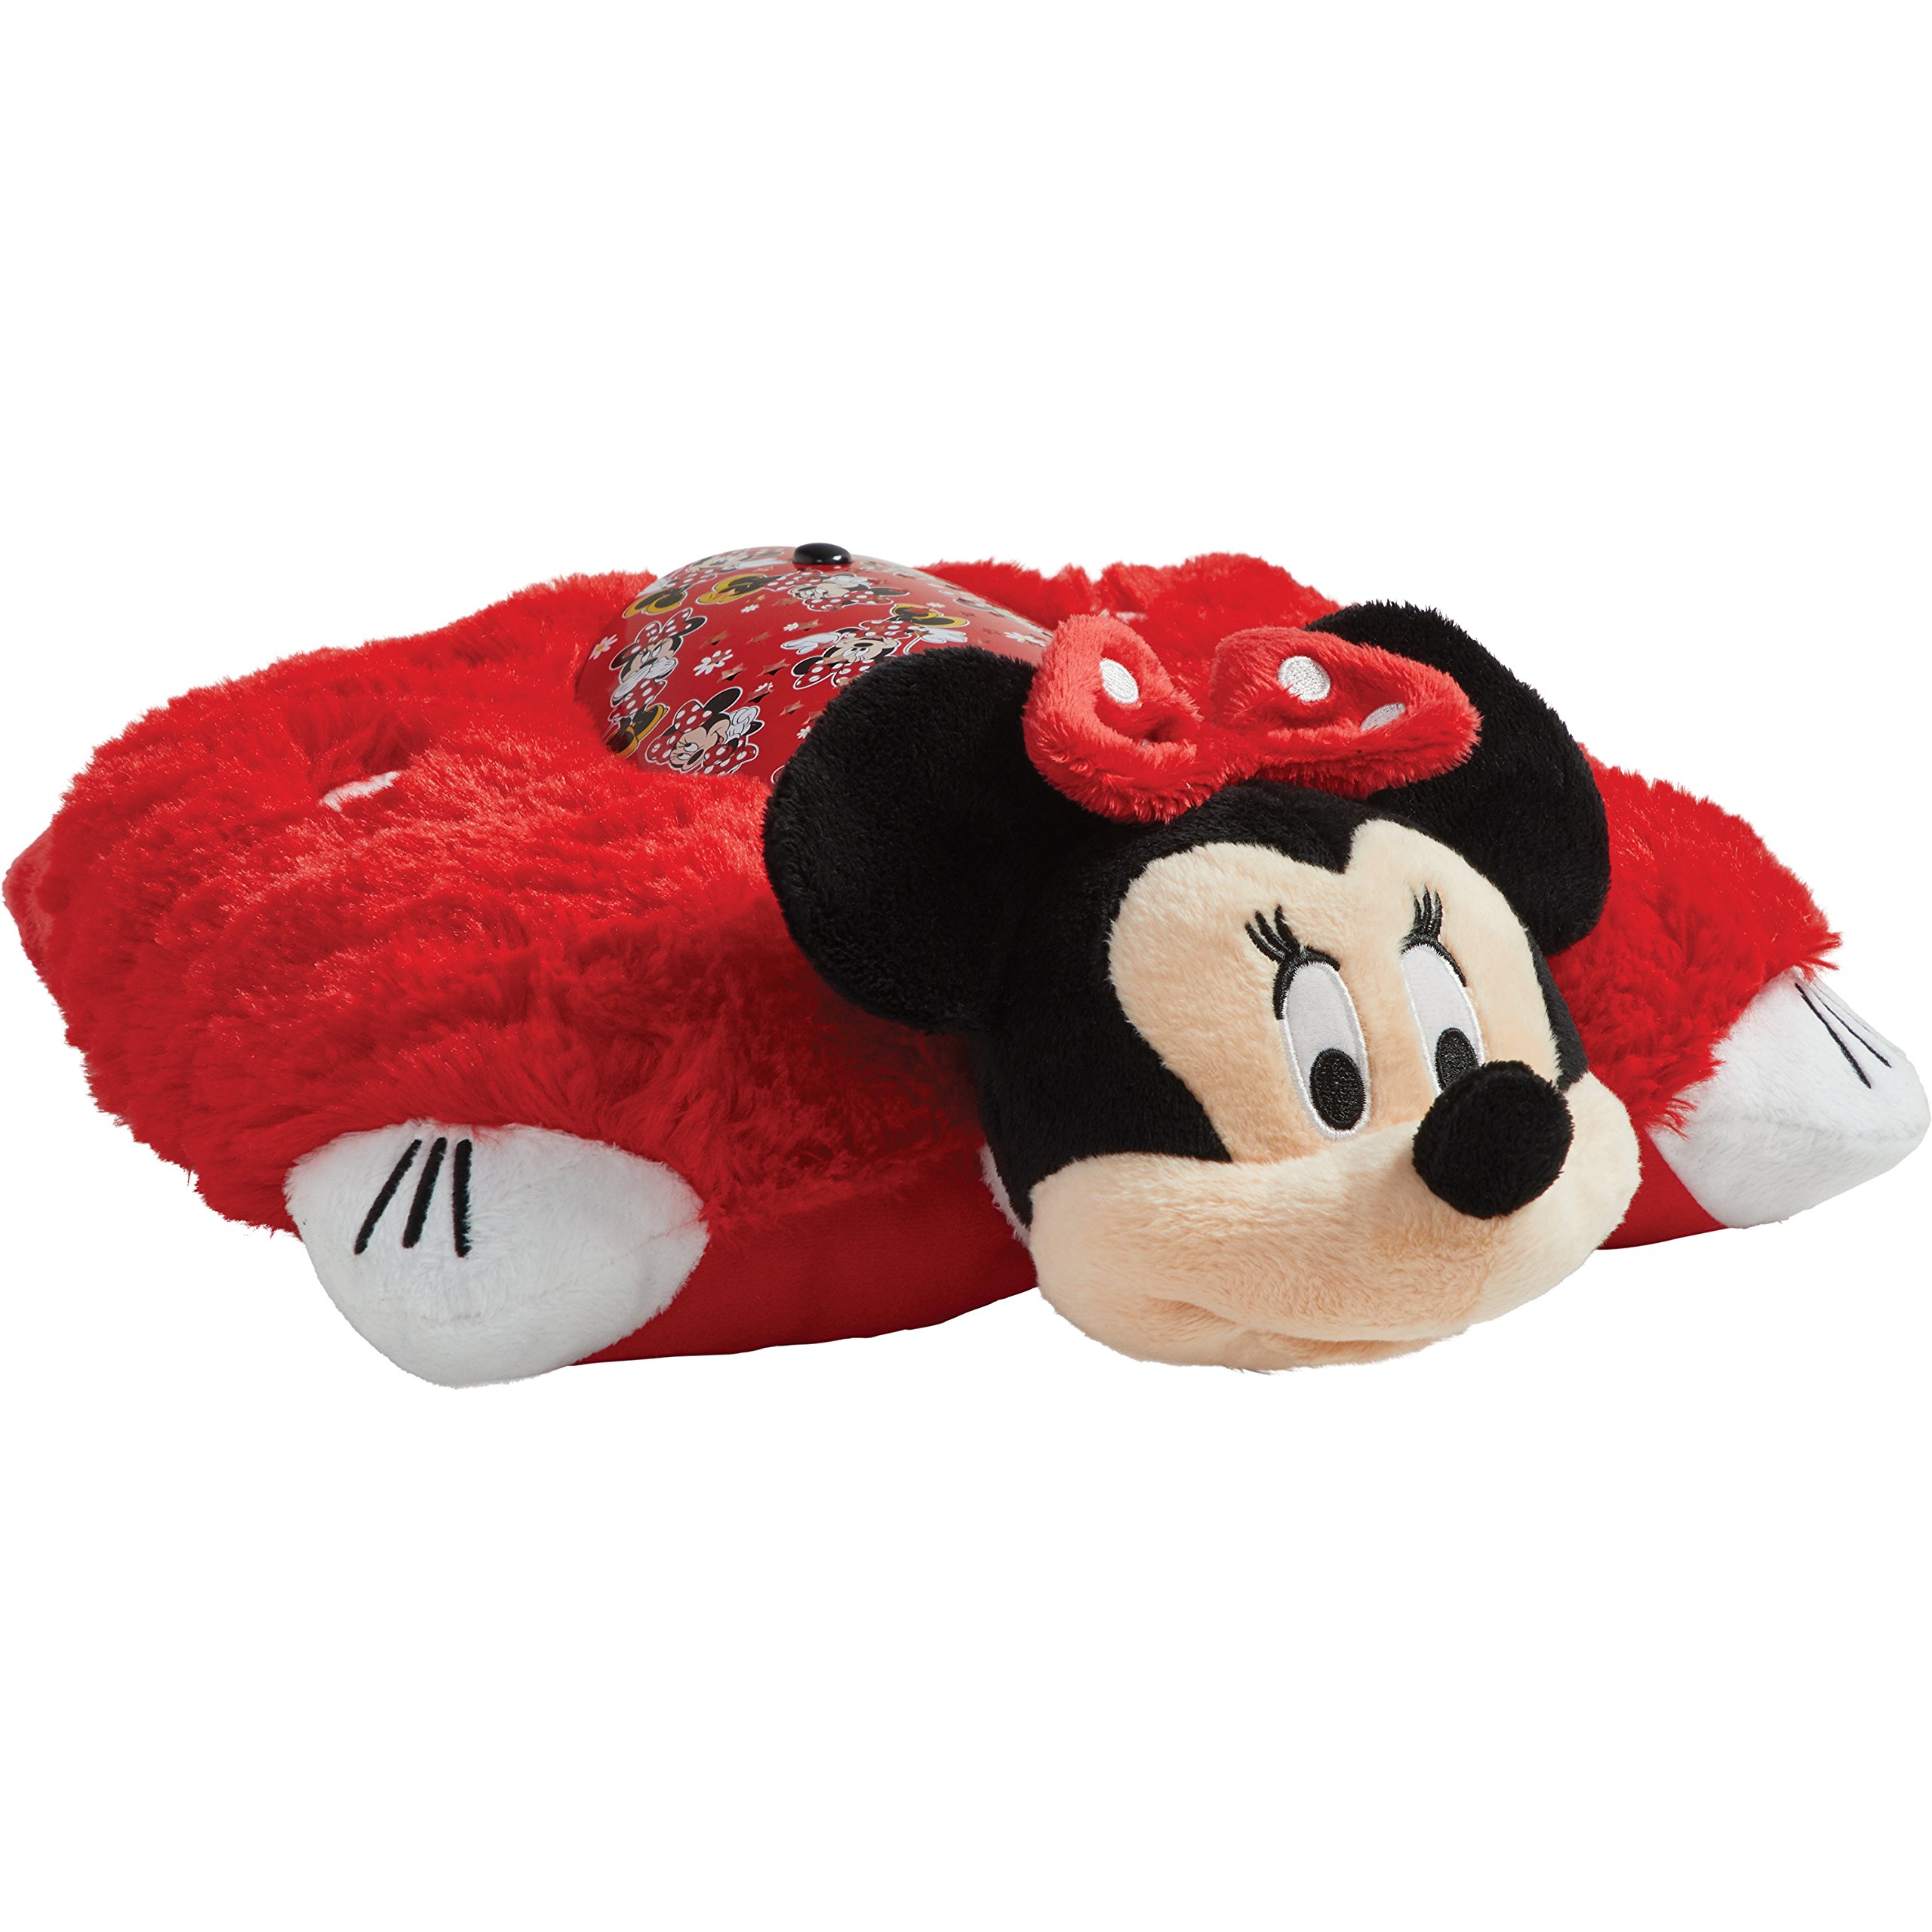 Pillow Pets Disney Rockin the Dots Minnie Mouse Sleeptime Lites - Retro Minnie Mouse Plush Night Light